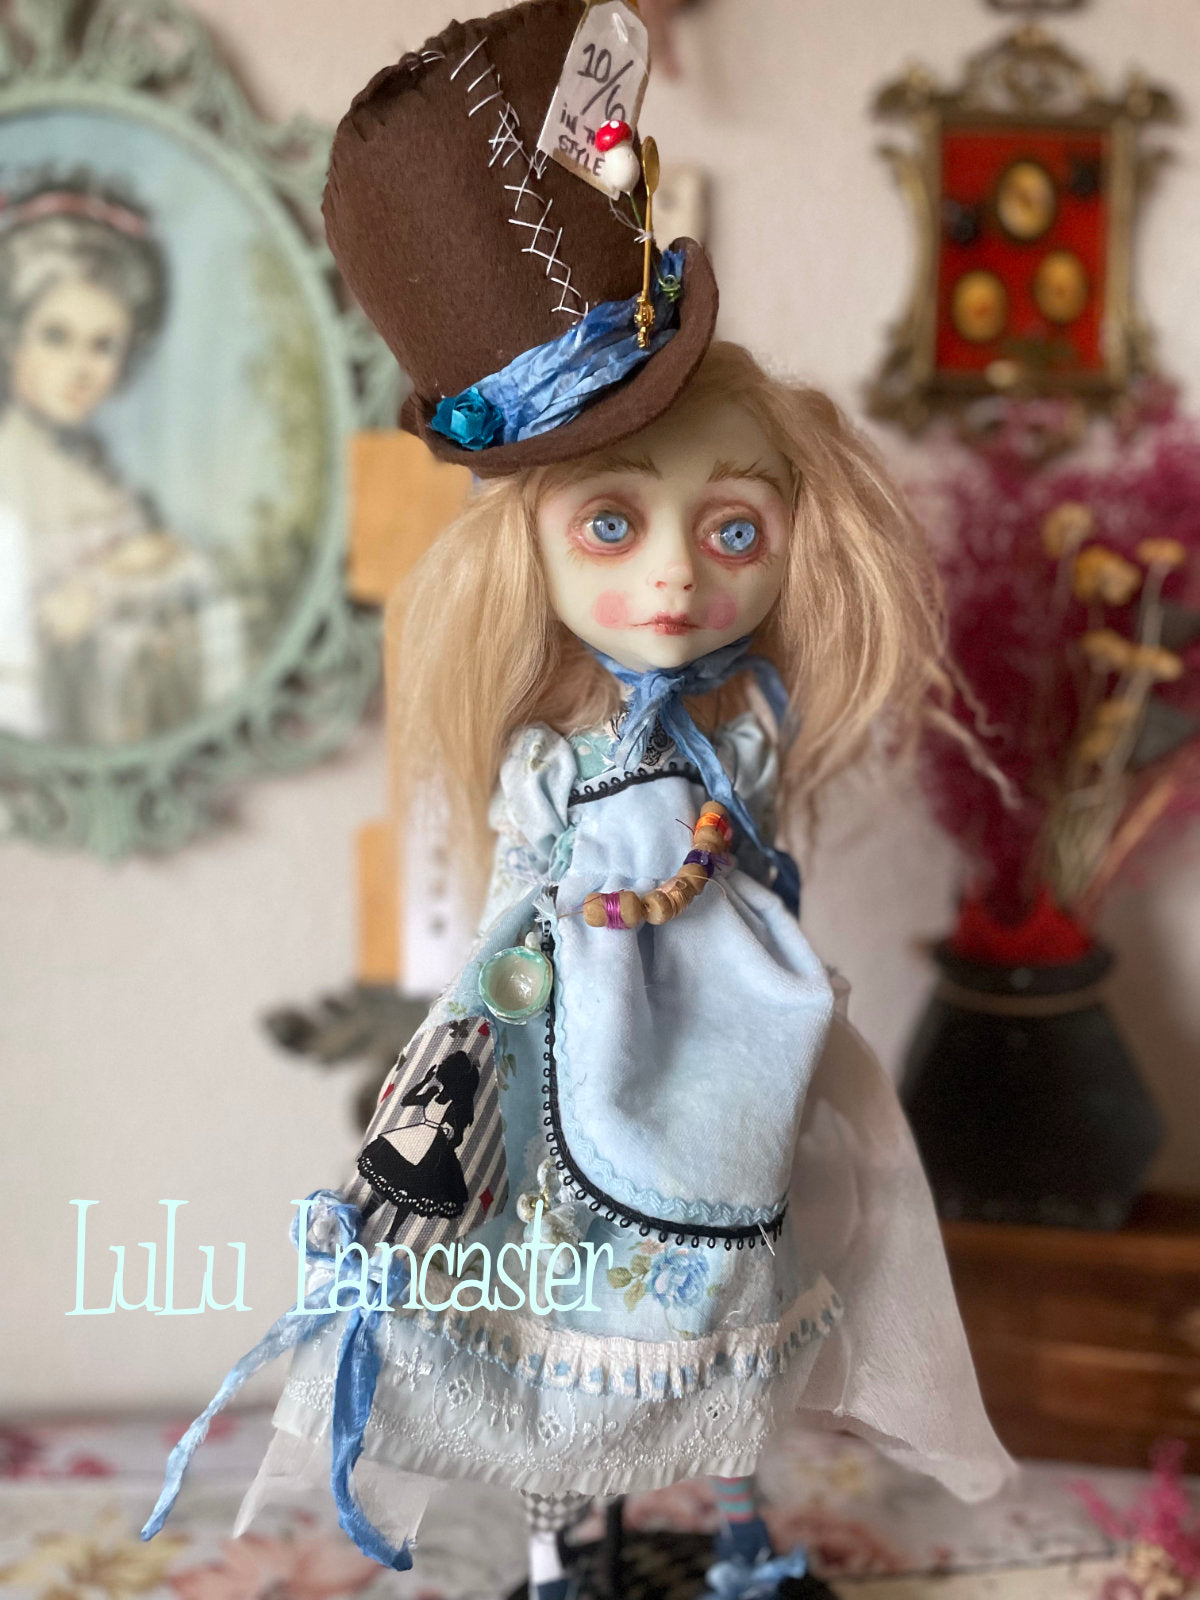 Alice Hatter Mashup LuLu's Wonderland Original LuLu Lancaster Art Doll